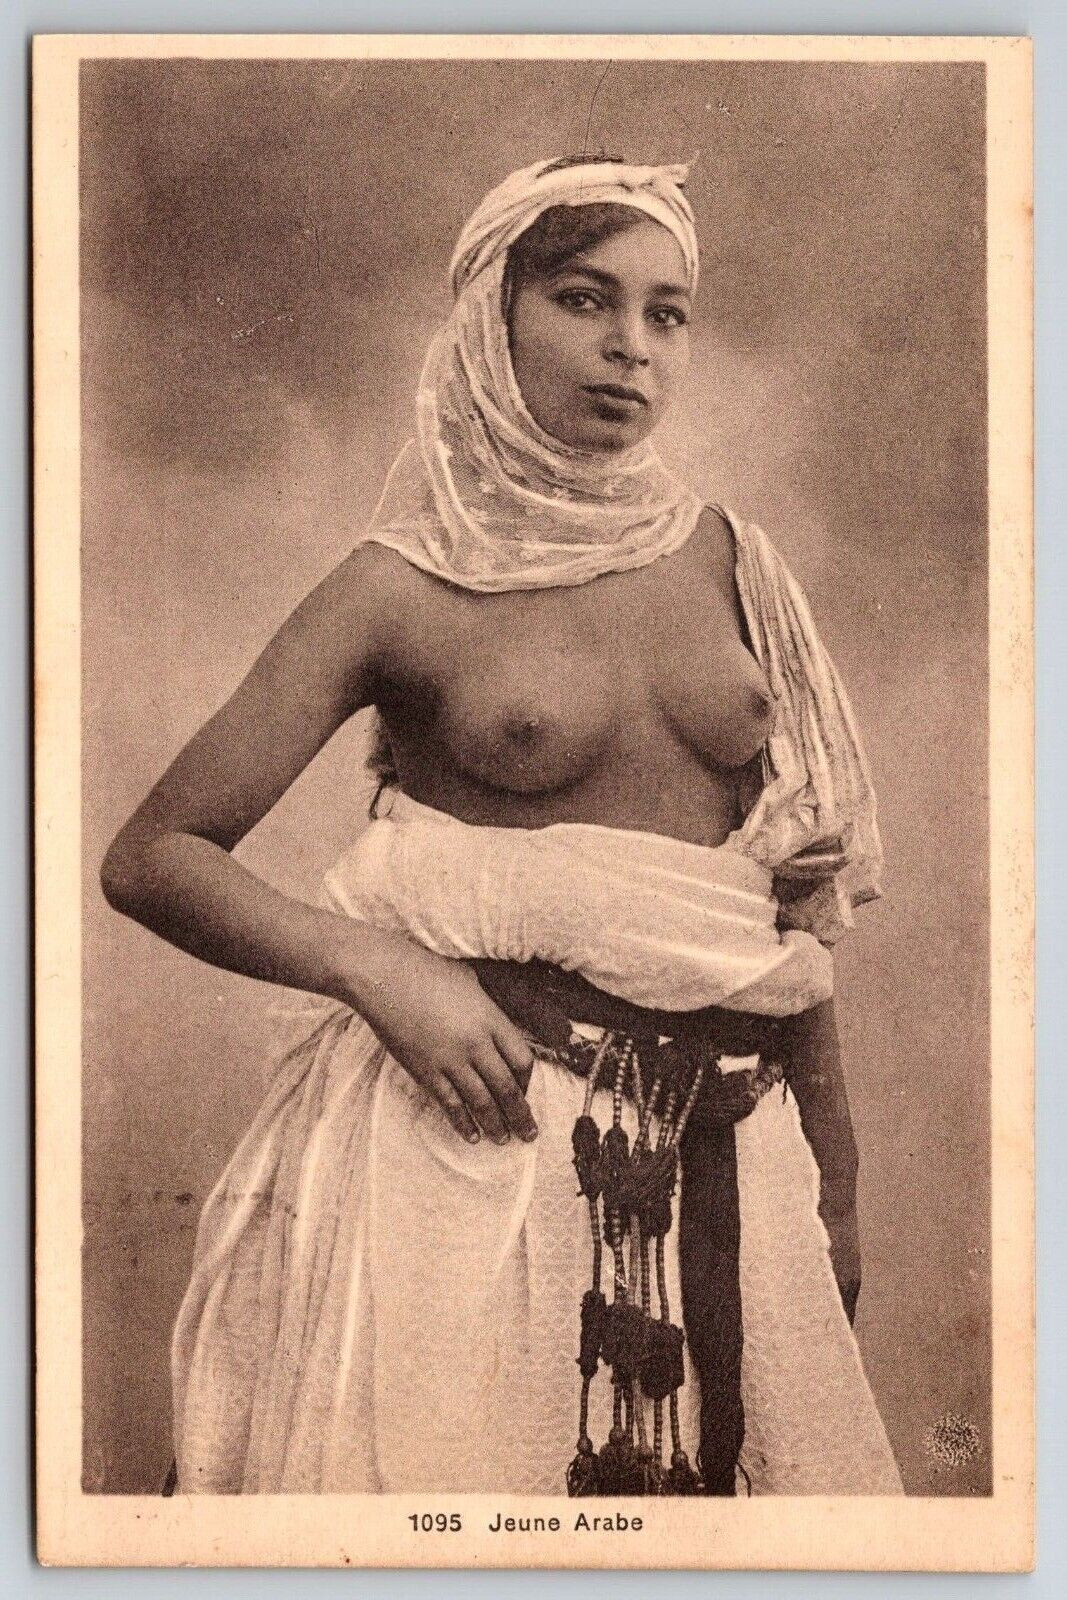 Scenes Mauresque Nude Moorish Arab Woman Vintage Ethnic Postcard French Algeria